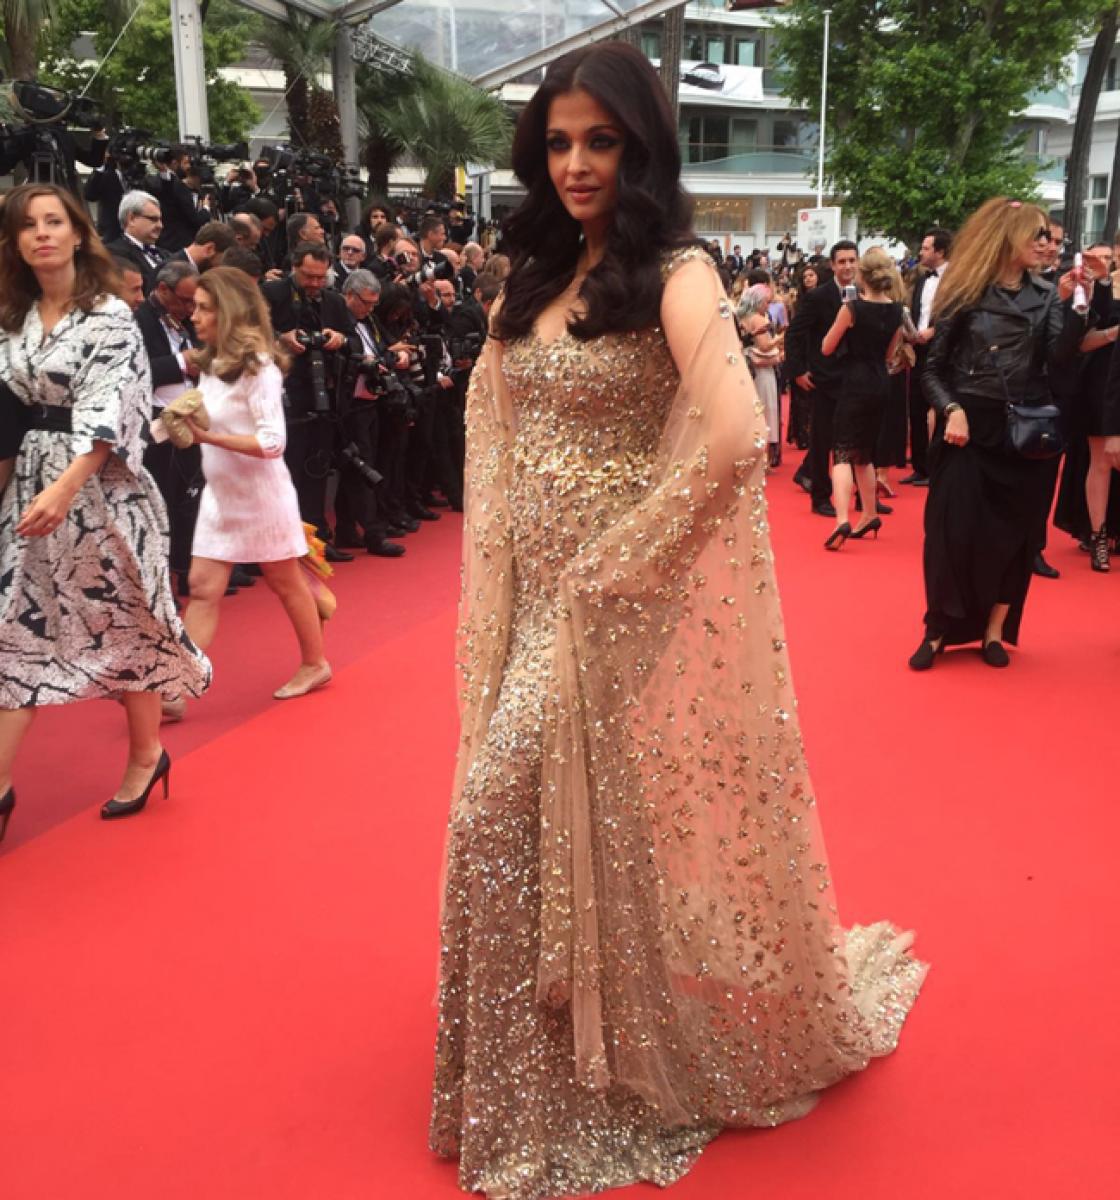 Blue Film Of Aishwria Ria - Aishwarya Rai Bachchan decks up in gold at Cannes red carpet